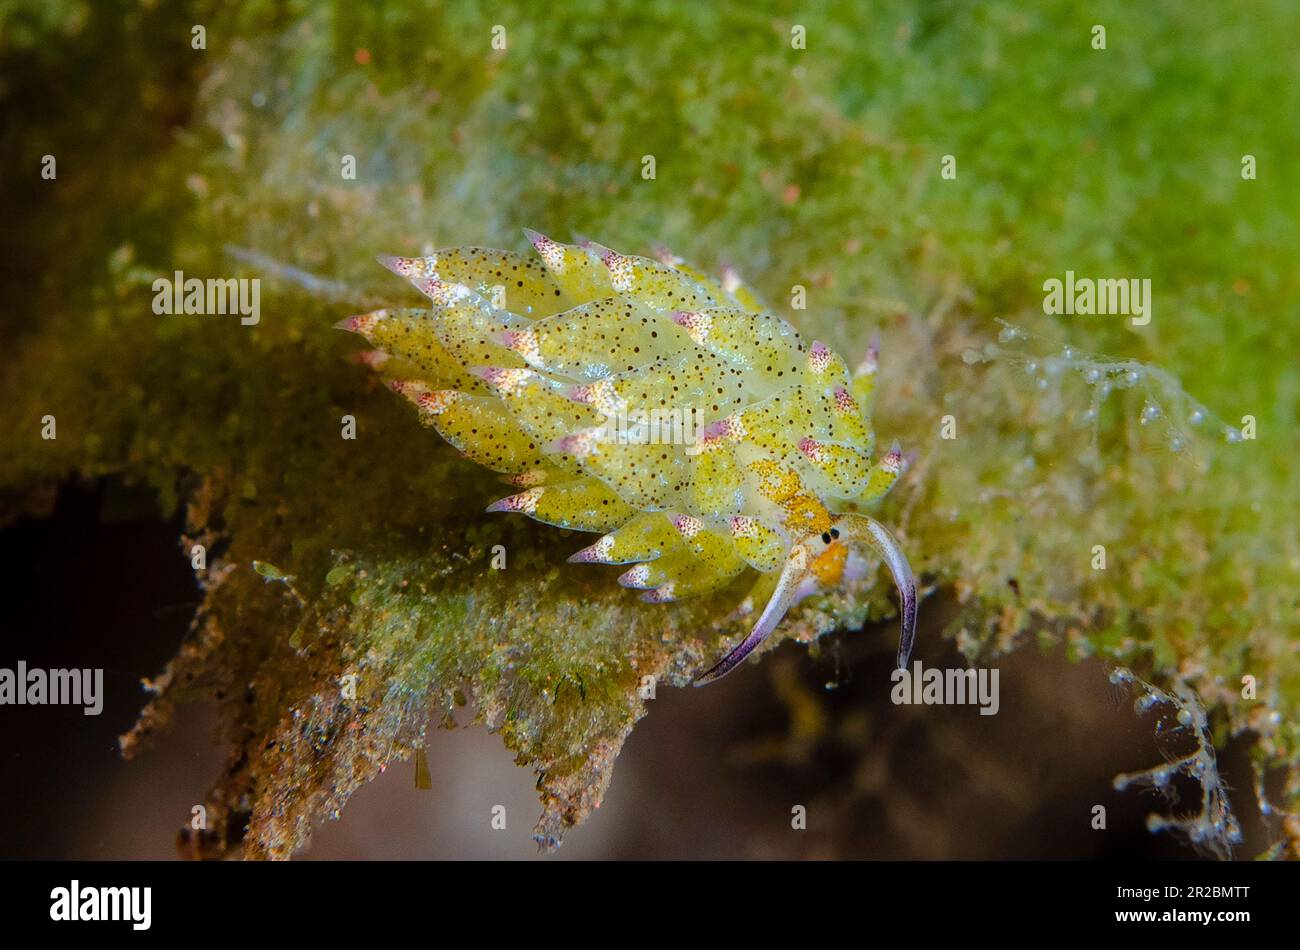 Kuro Sea Slug, Costasiella kuroshimae, on  green algae, Avrainvillea sp, Melasti dive site, Tulamben, Karangasem Regency, Bali, Indonesia Stock Photo